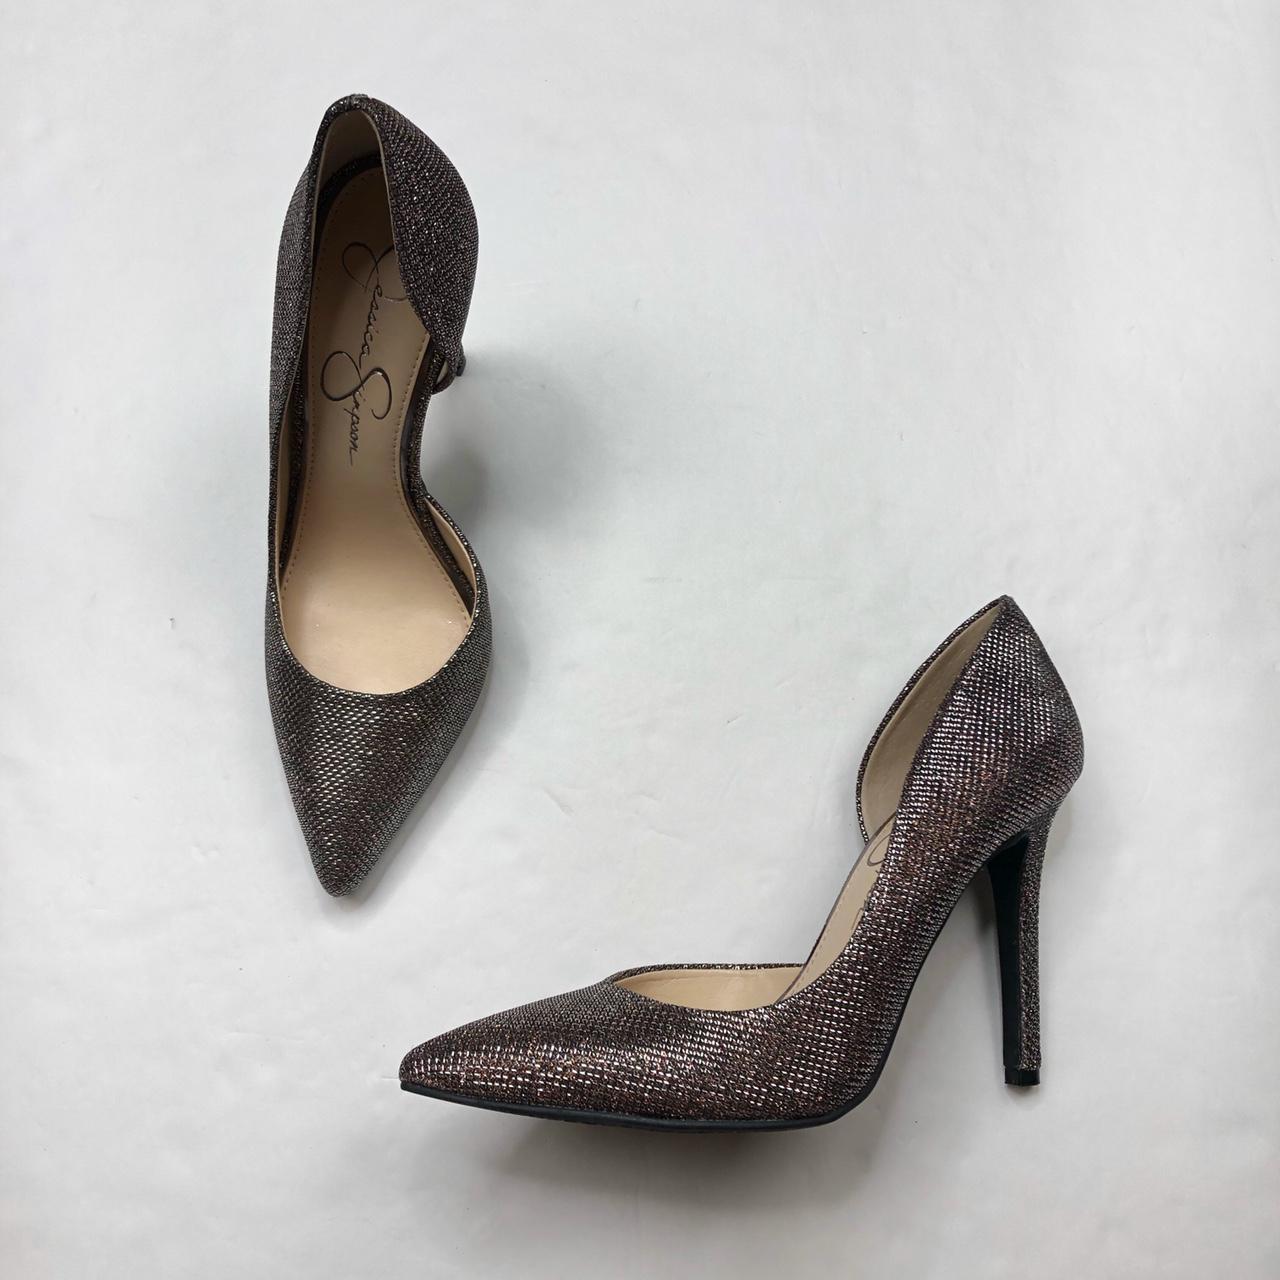 Product Image 2 - Metallic brown silver d’Orsay heels

Brand: